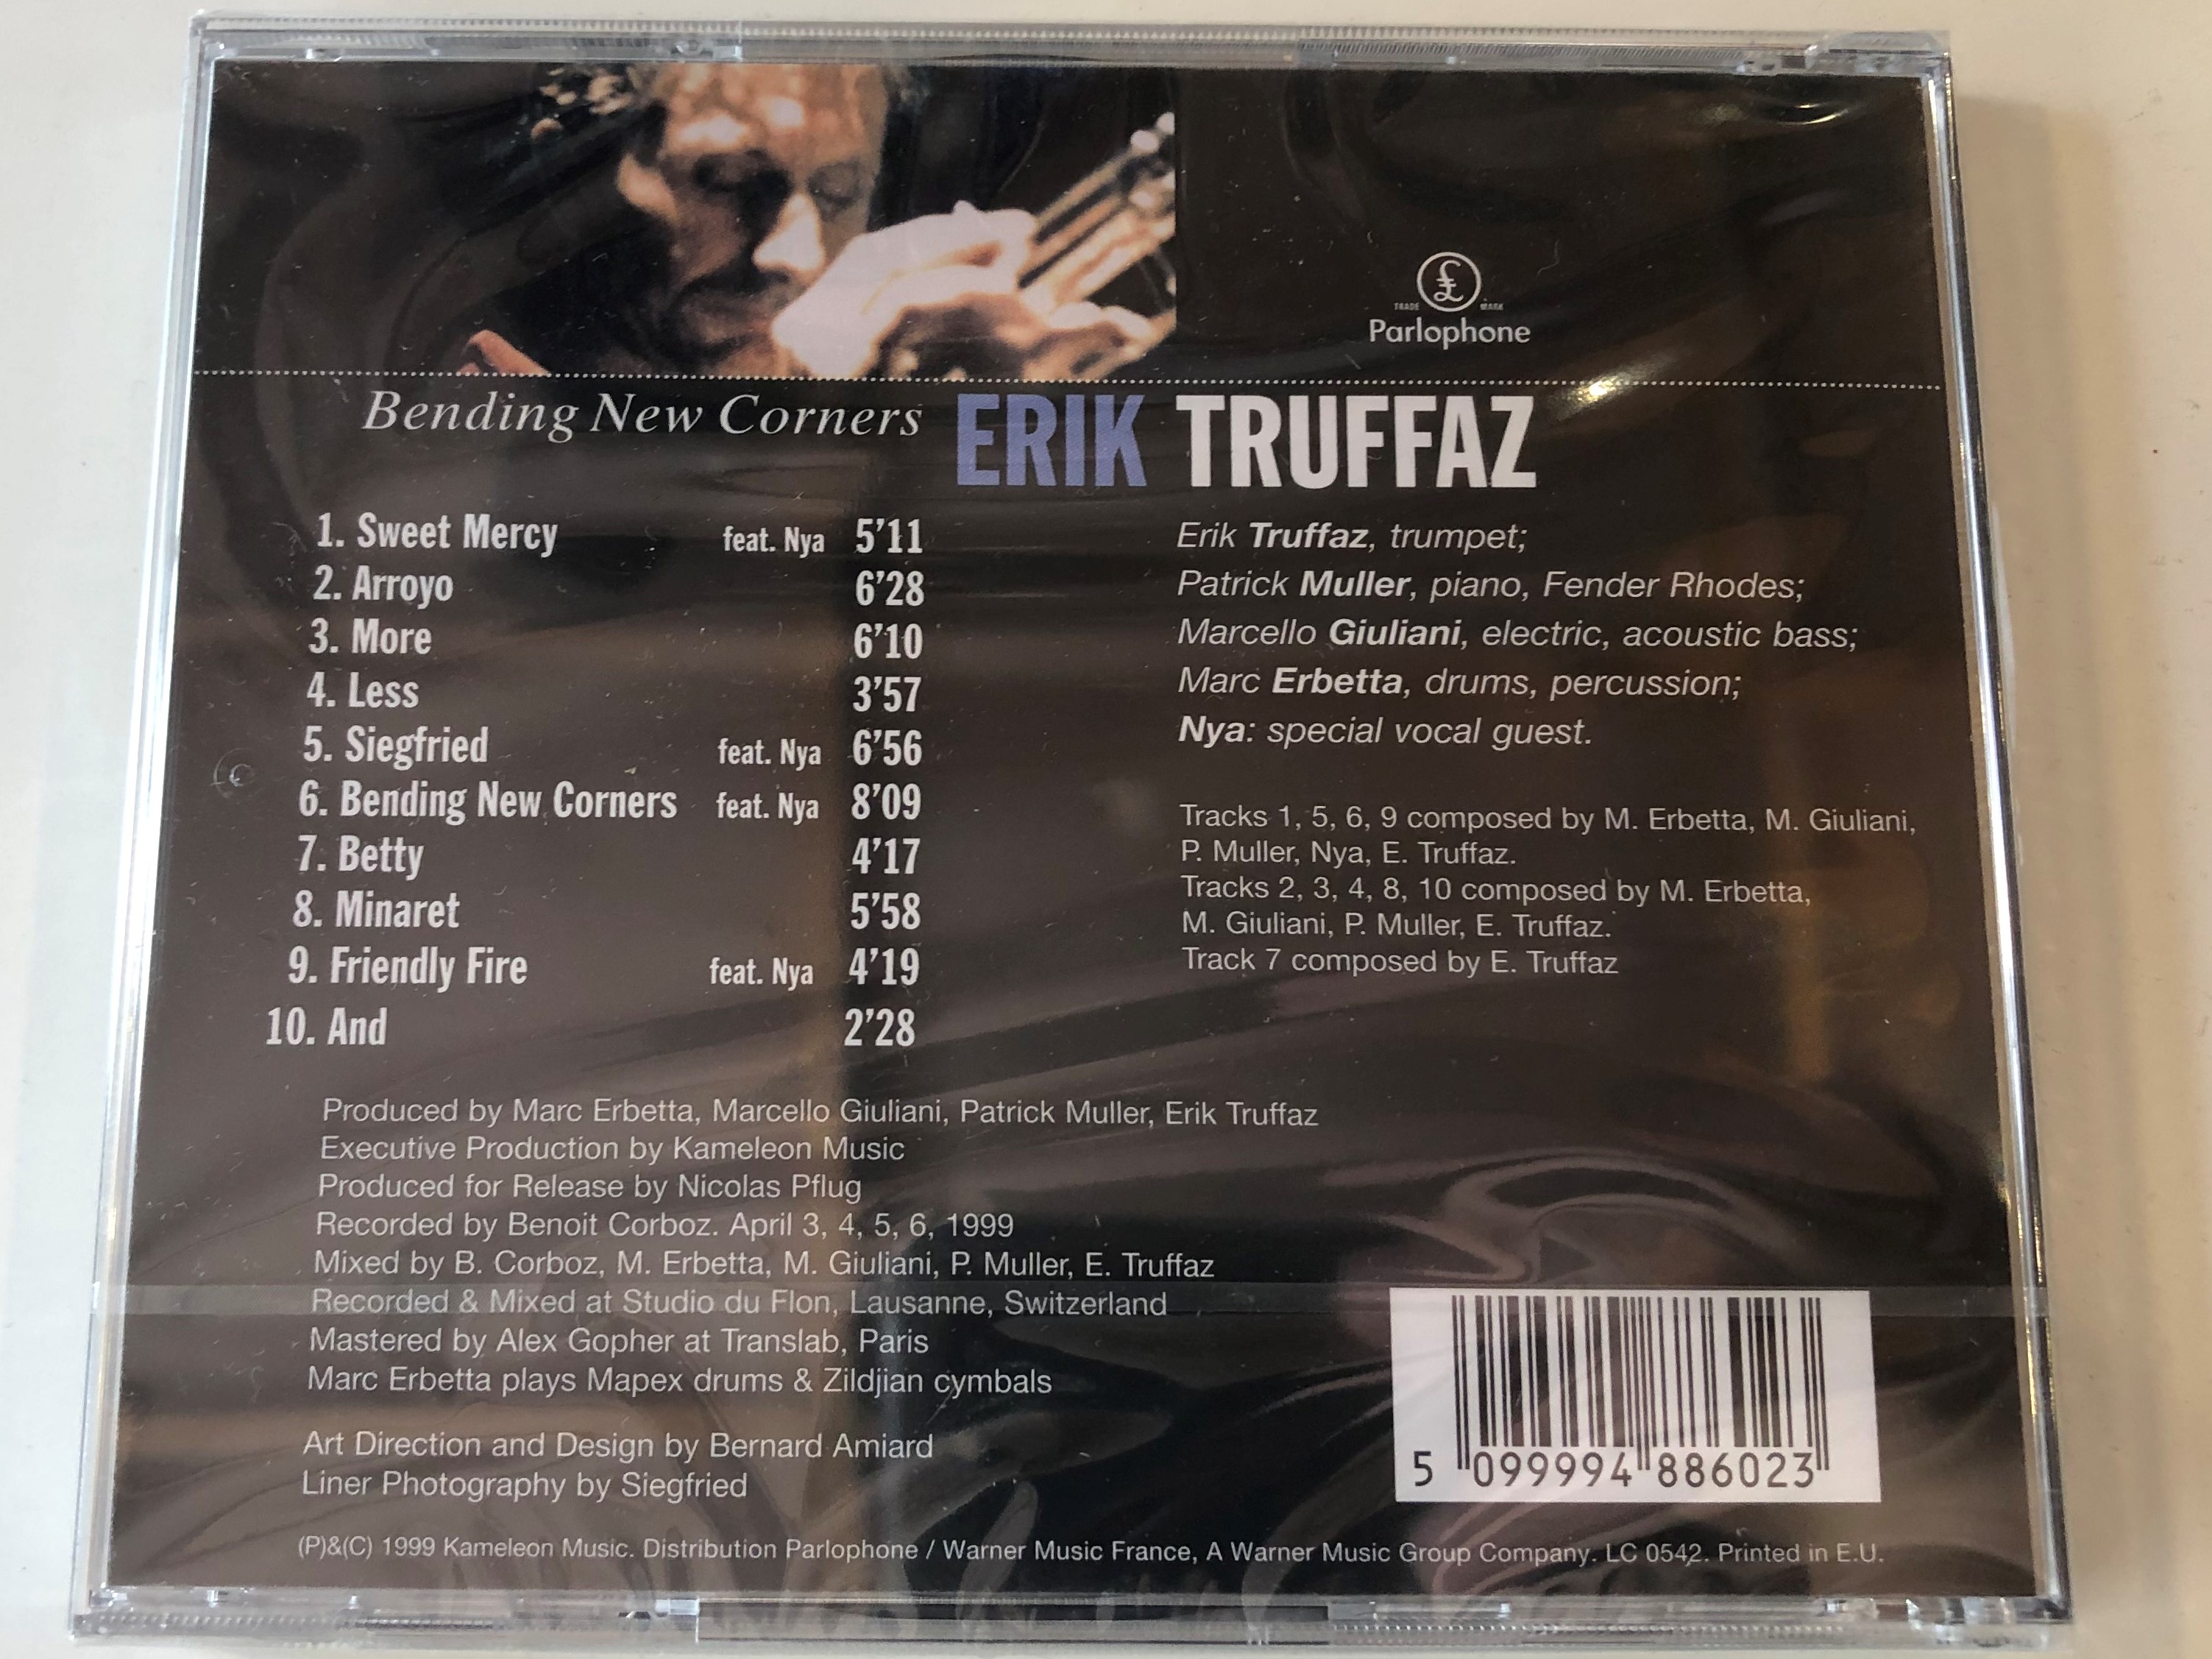 erik-truffaz-patrick-muller-marcello-giuliani-marc-erbetta-featuring-nya-bending-new-corners-parlophone-audio-cd-1999-5099994886023-2-.jpg